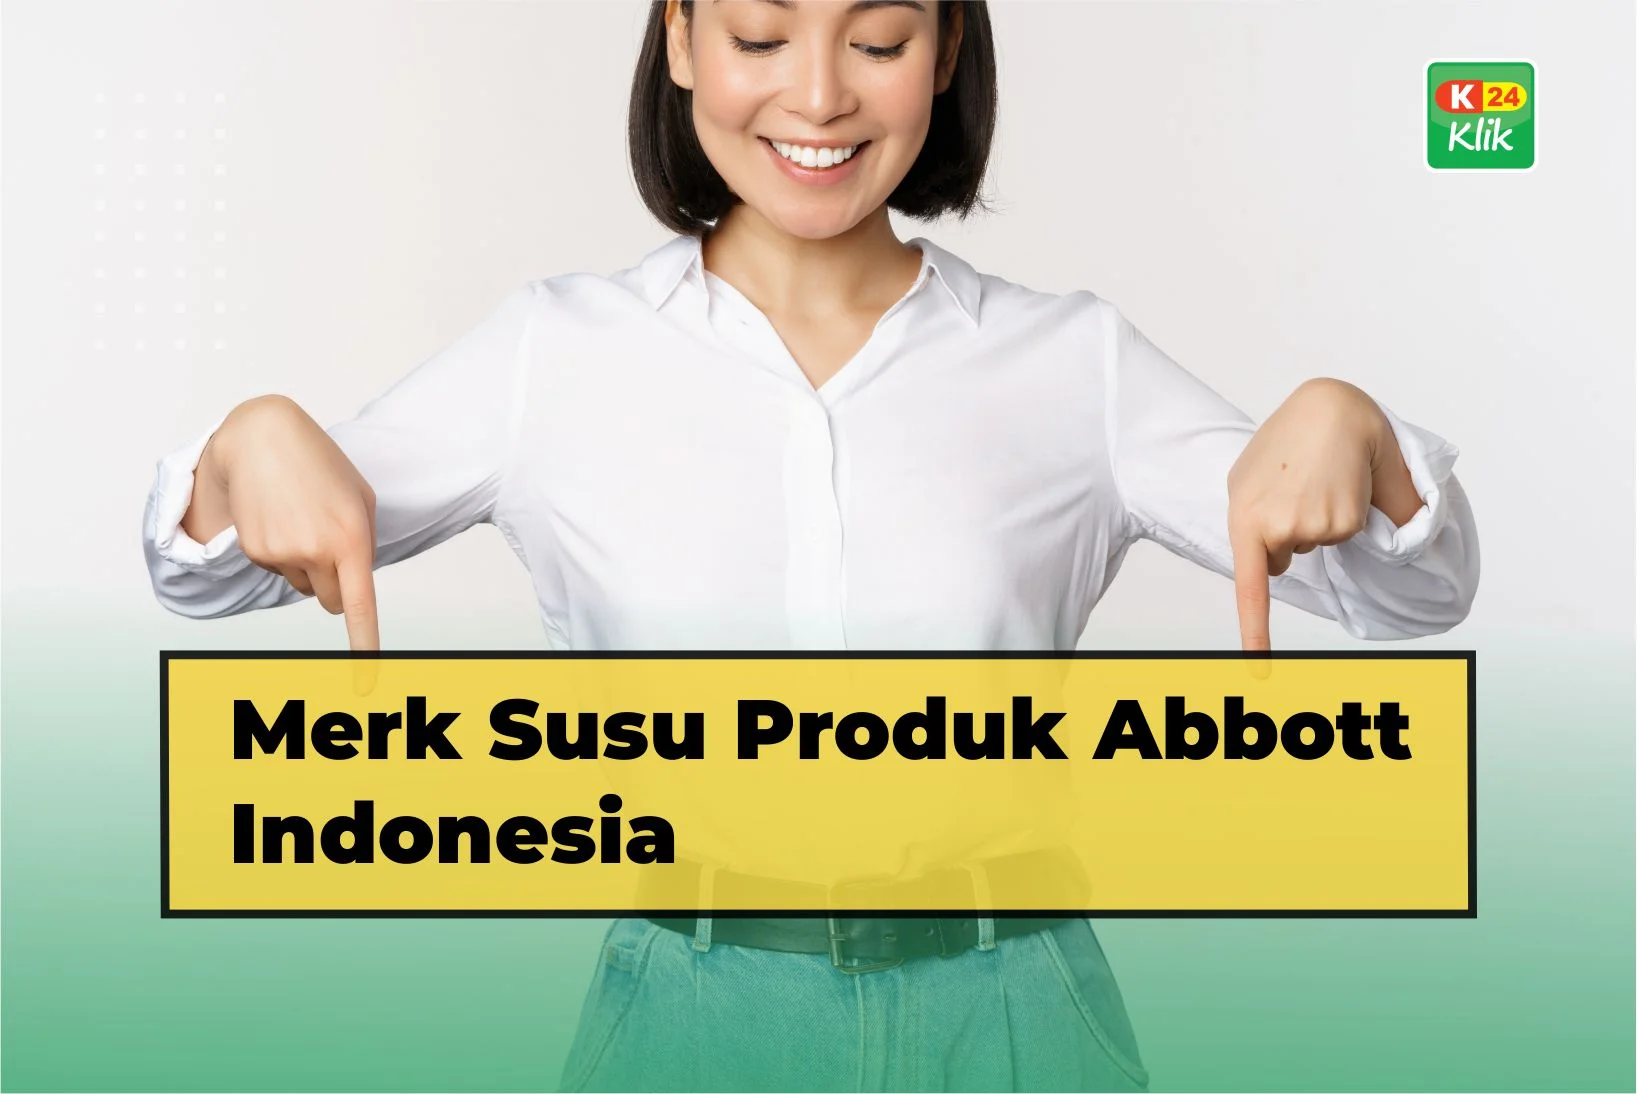 merk susu produk abbott indonesia